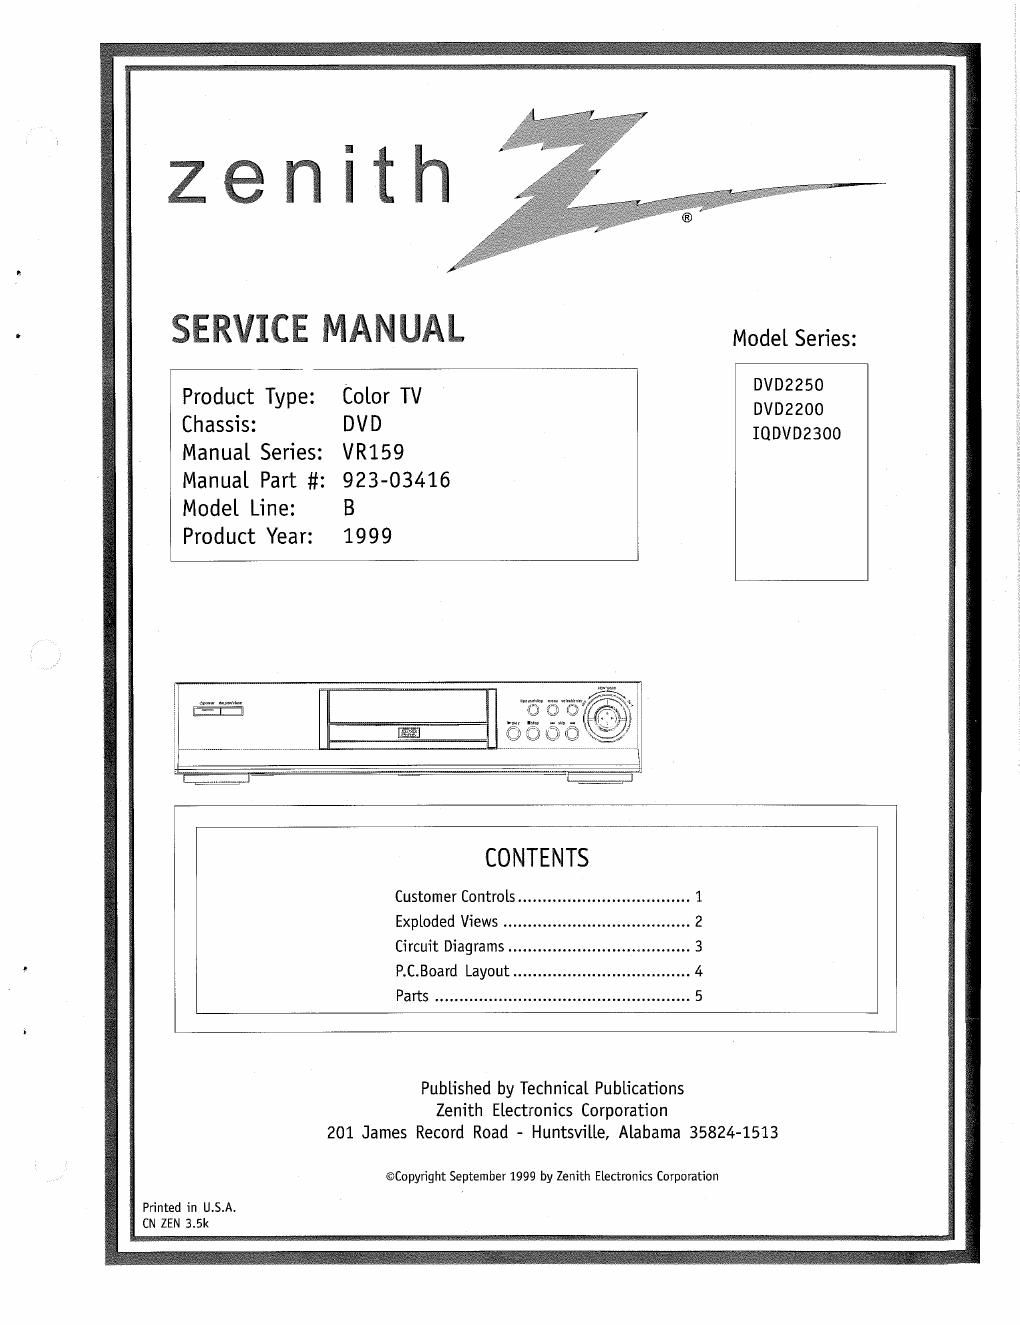 zenith dvd 2200 service manual